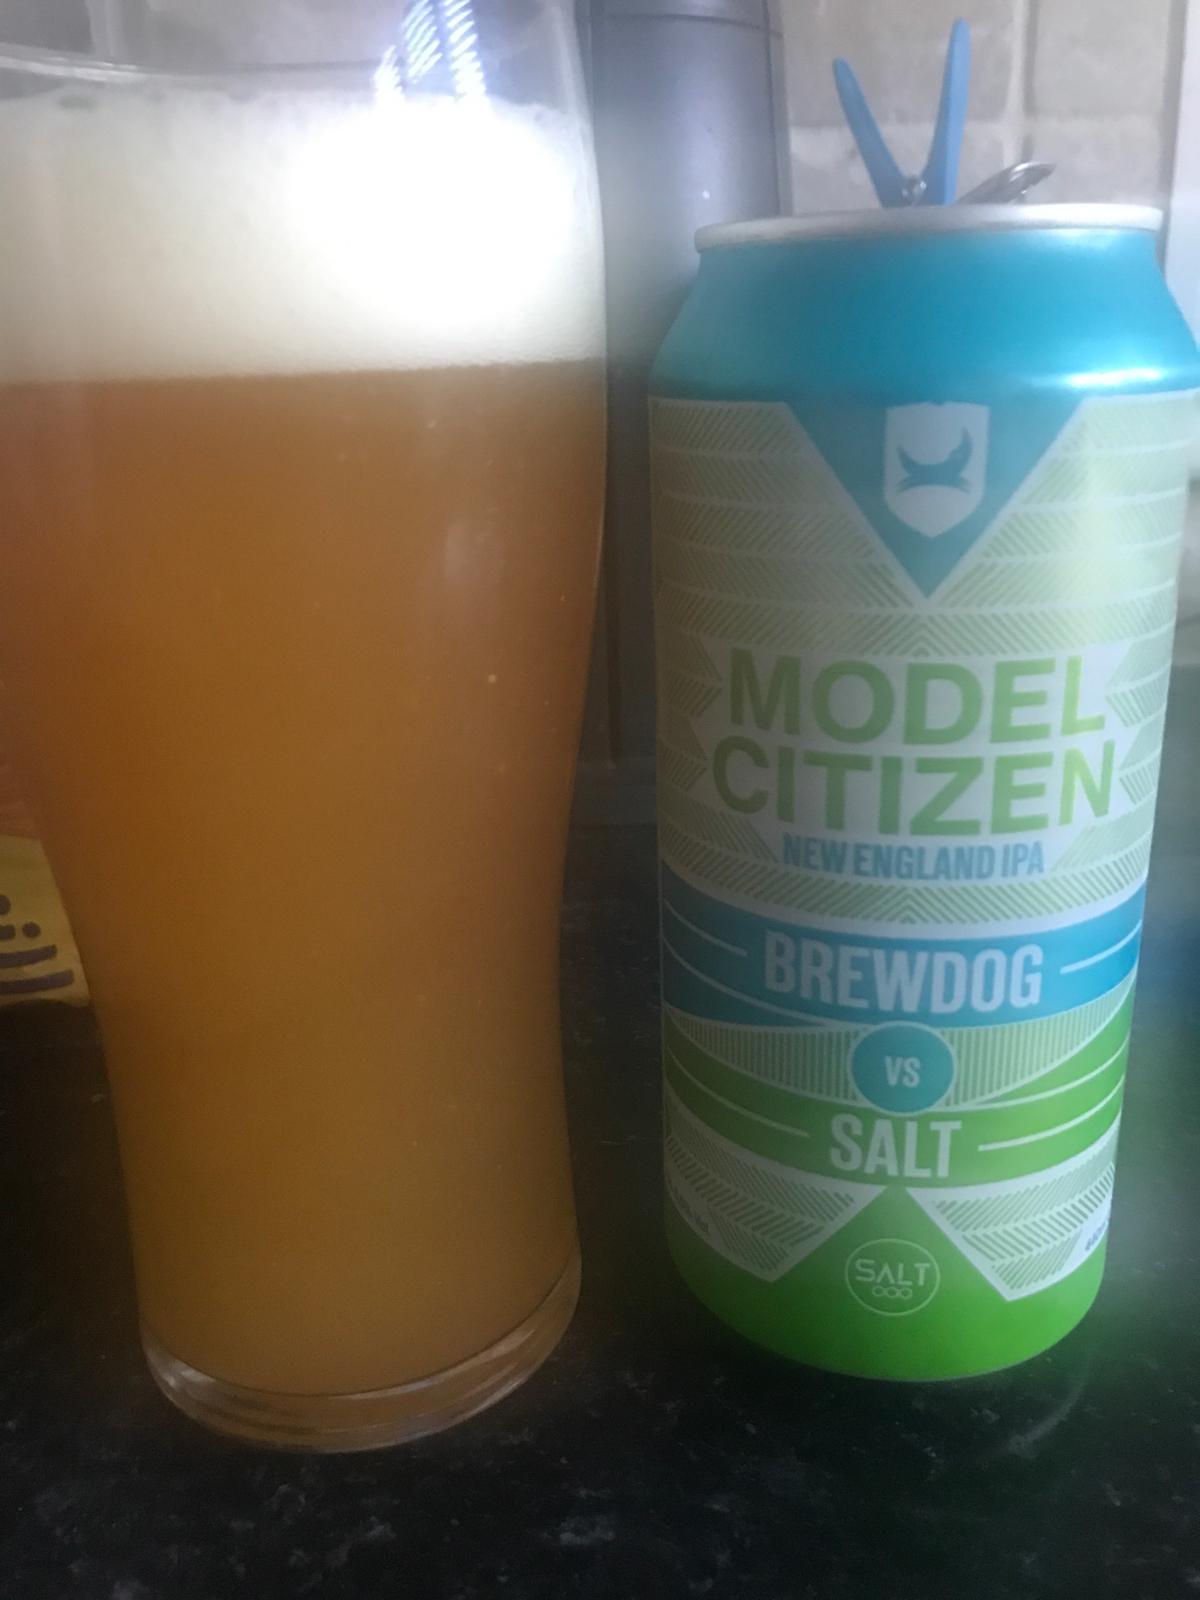 Model Citizen (Brewdog Vs Salt)